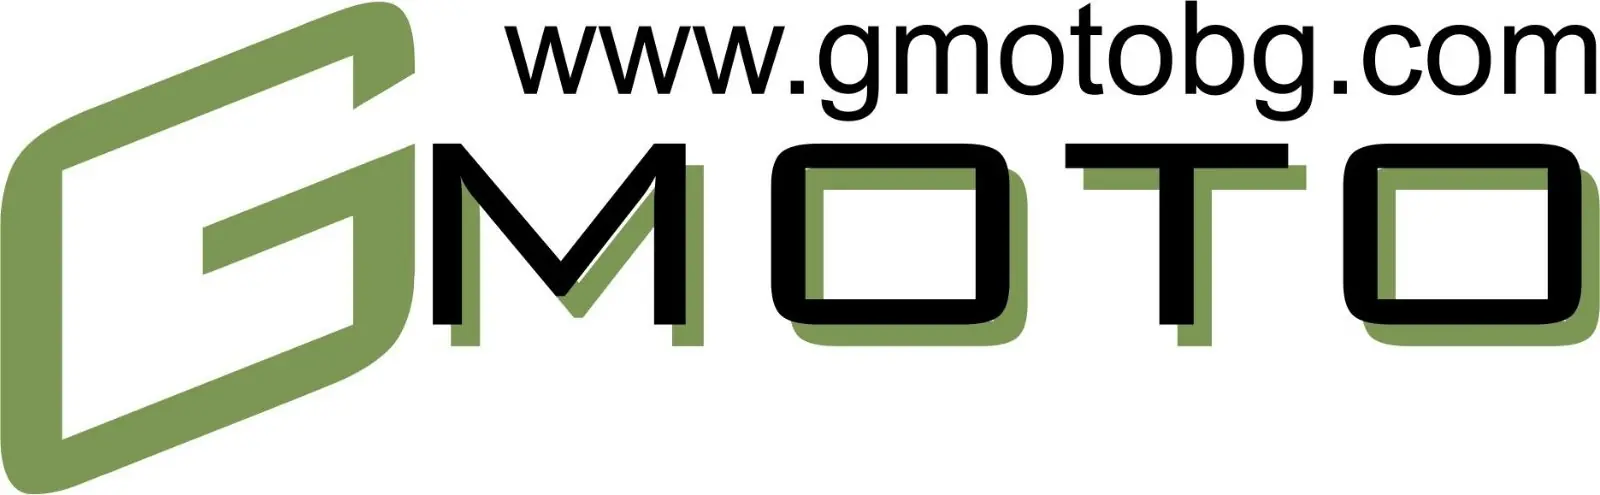 gmotobg site logo